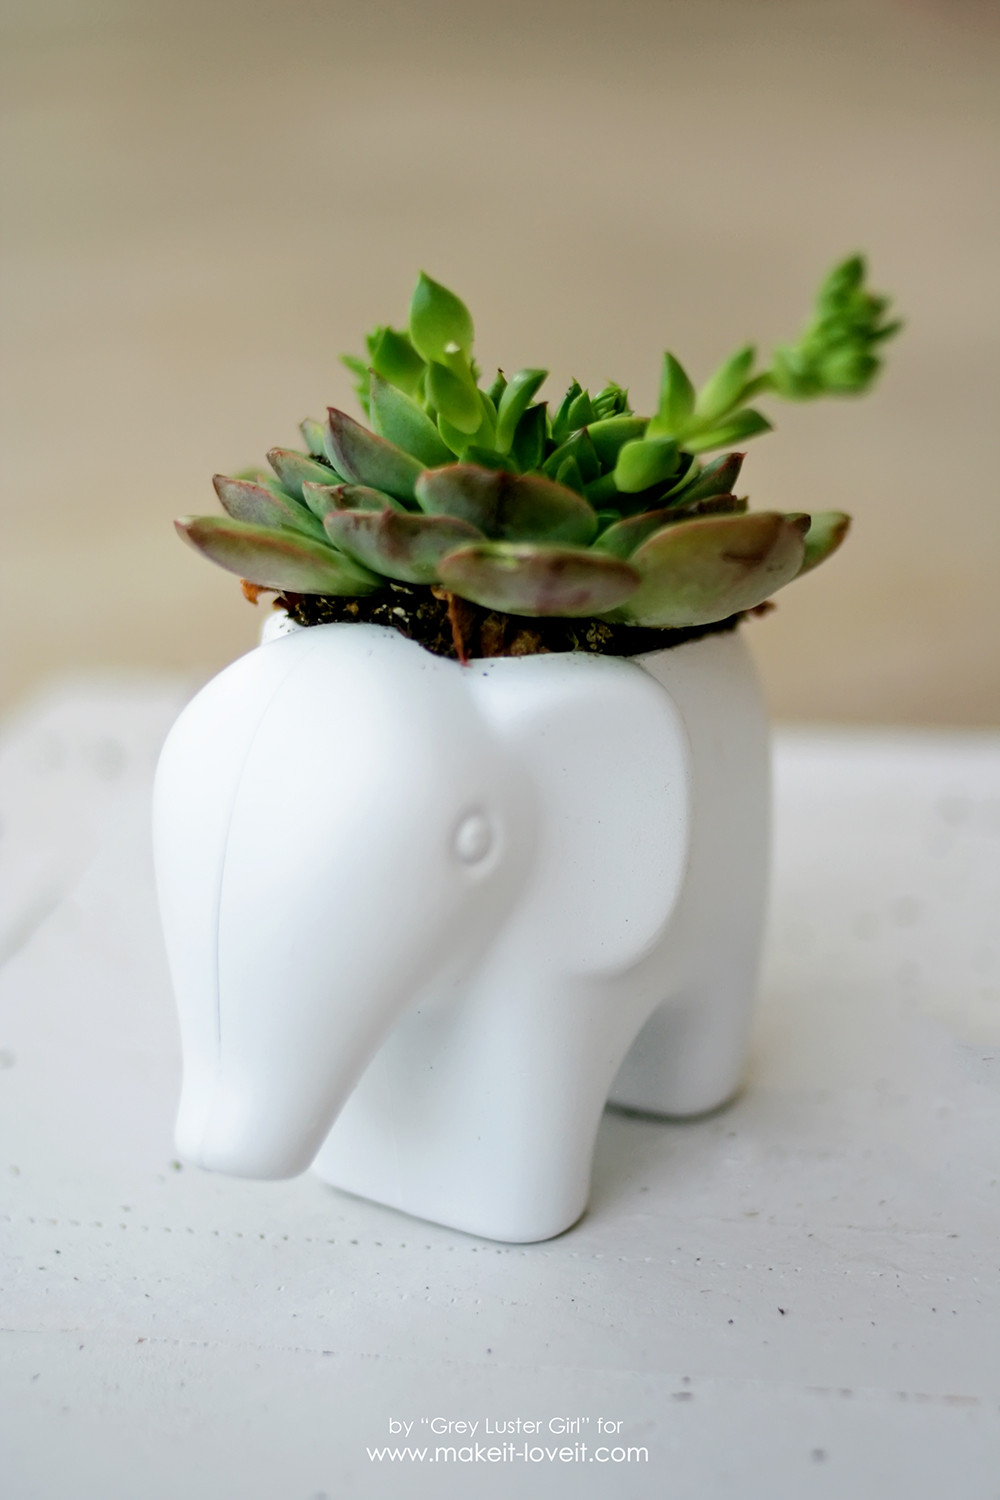 Best ideas about DIY Succulent Planter
. Save or Pin DIY Toy Elephant Succulent Planter Now.